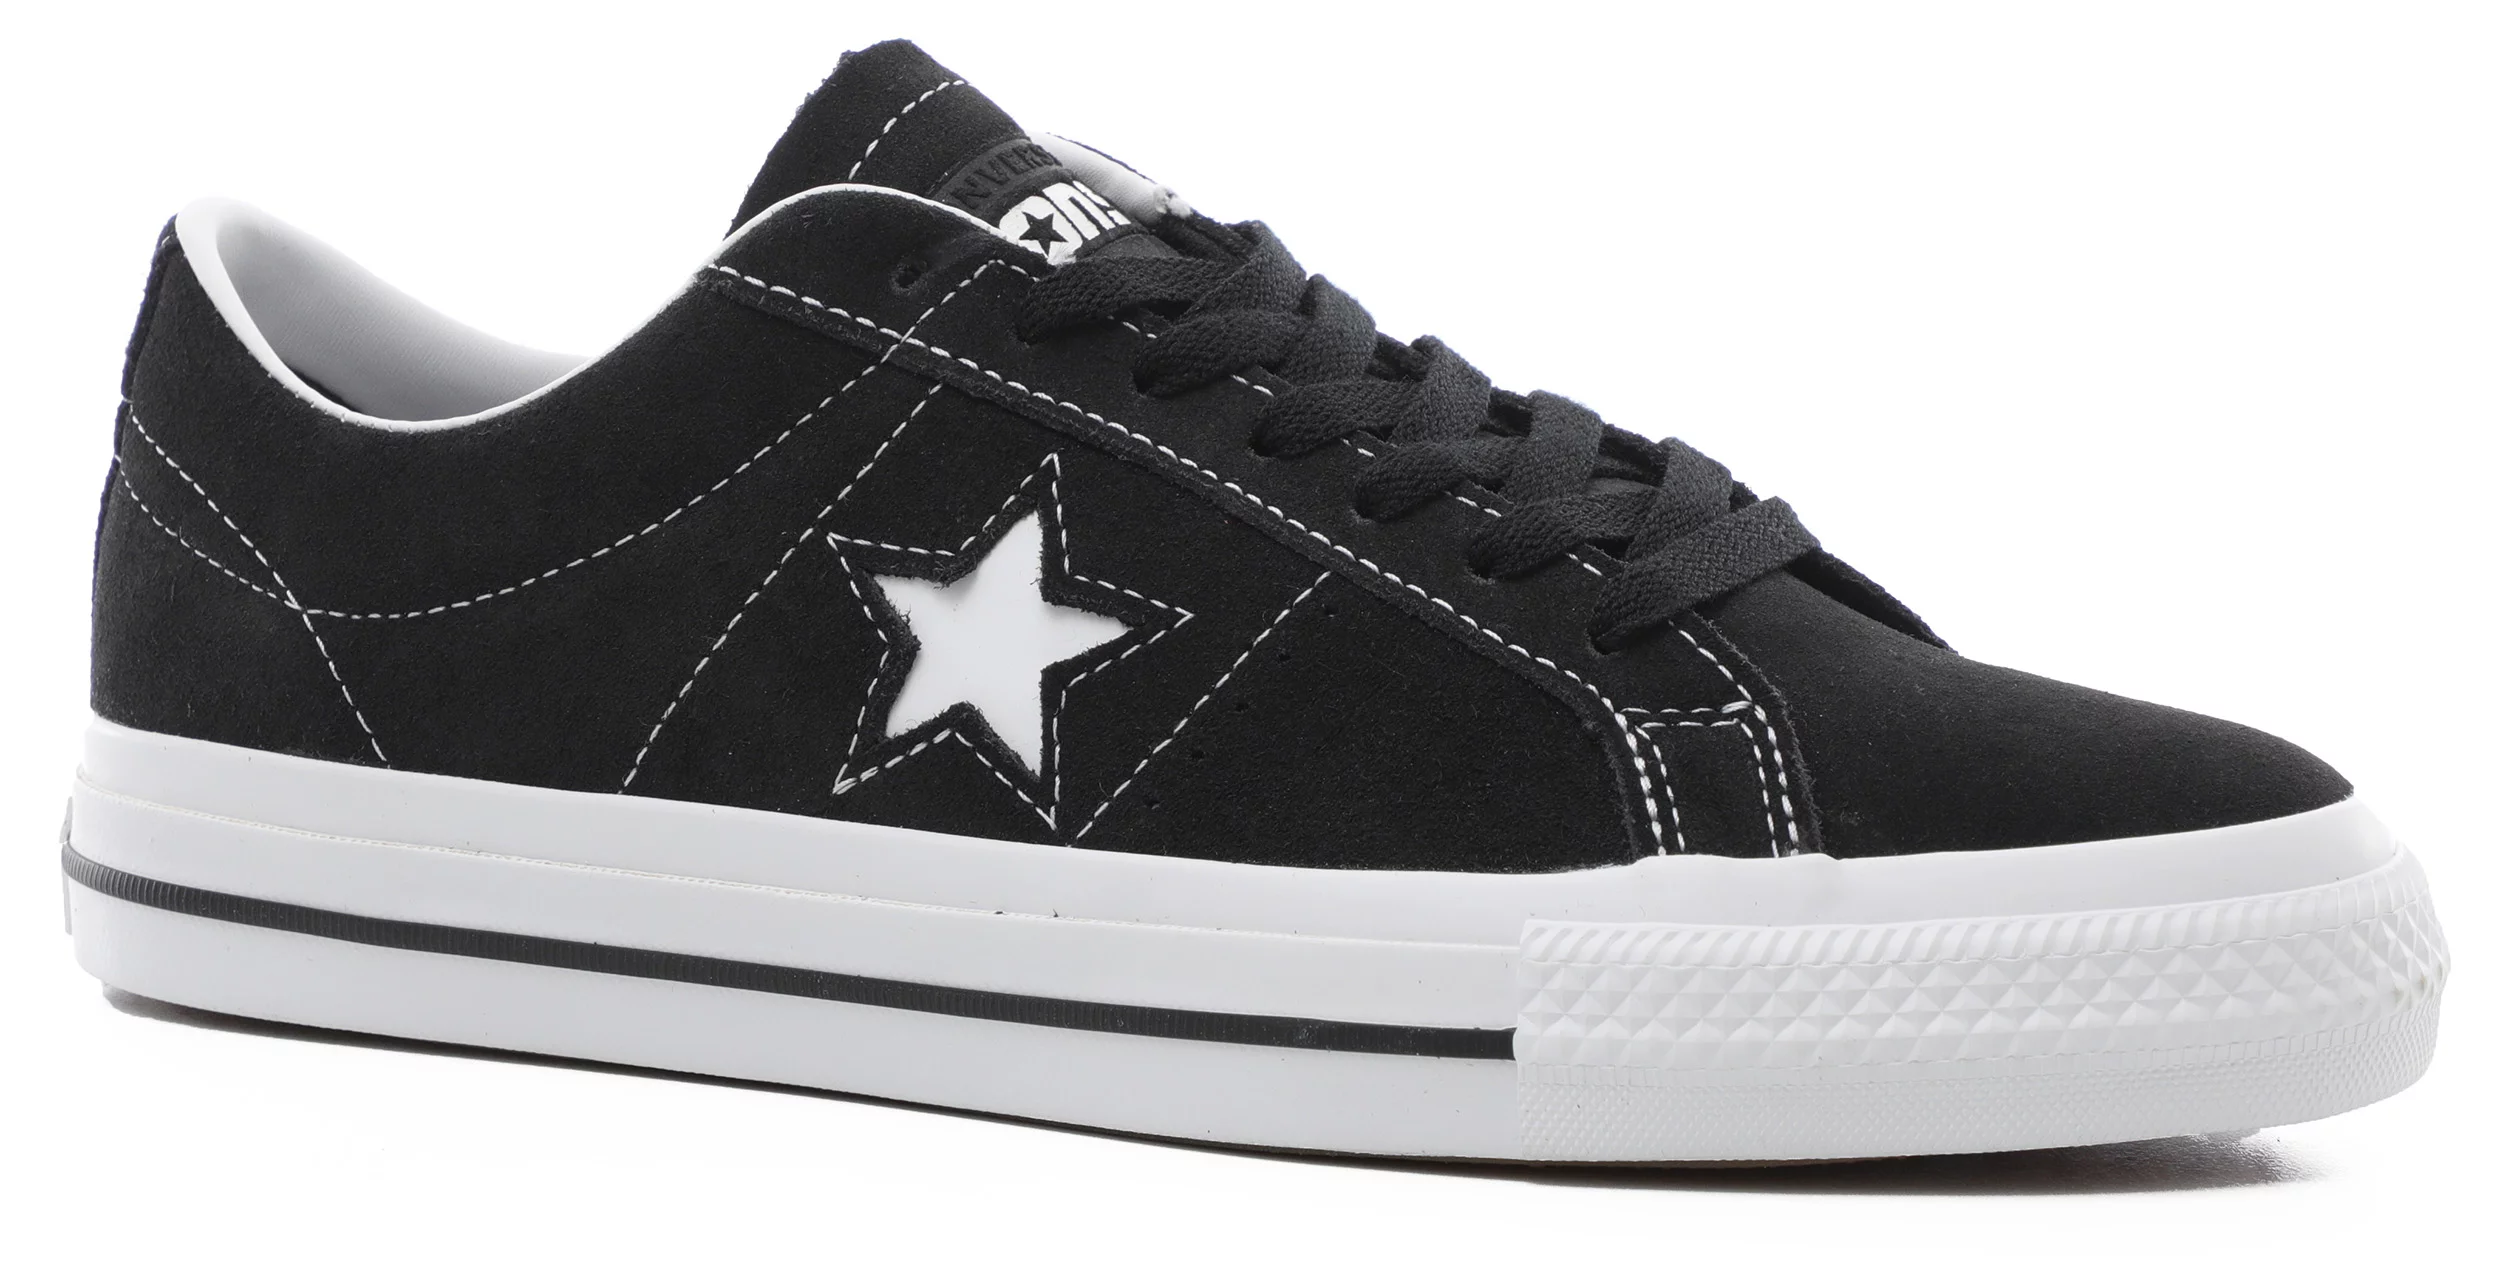 Converse One Star Pro Skate Shoes - black/black/white - Free Shipping |  Tactics